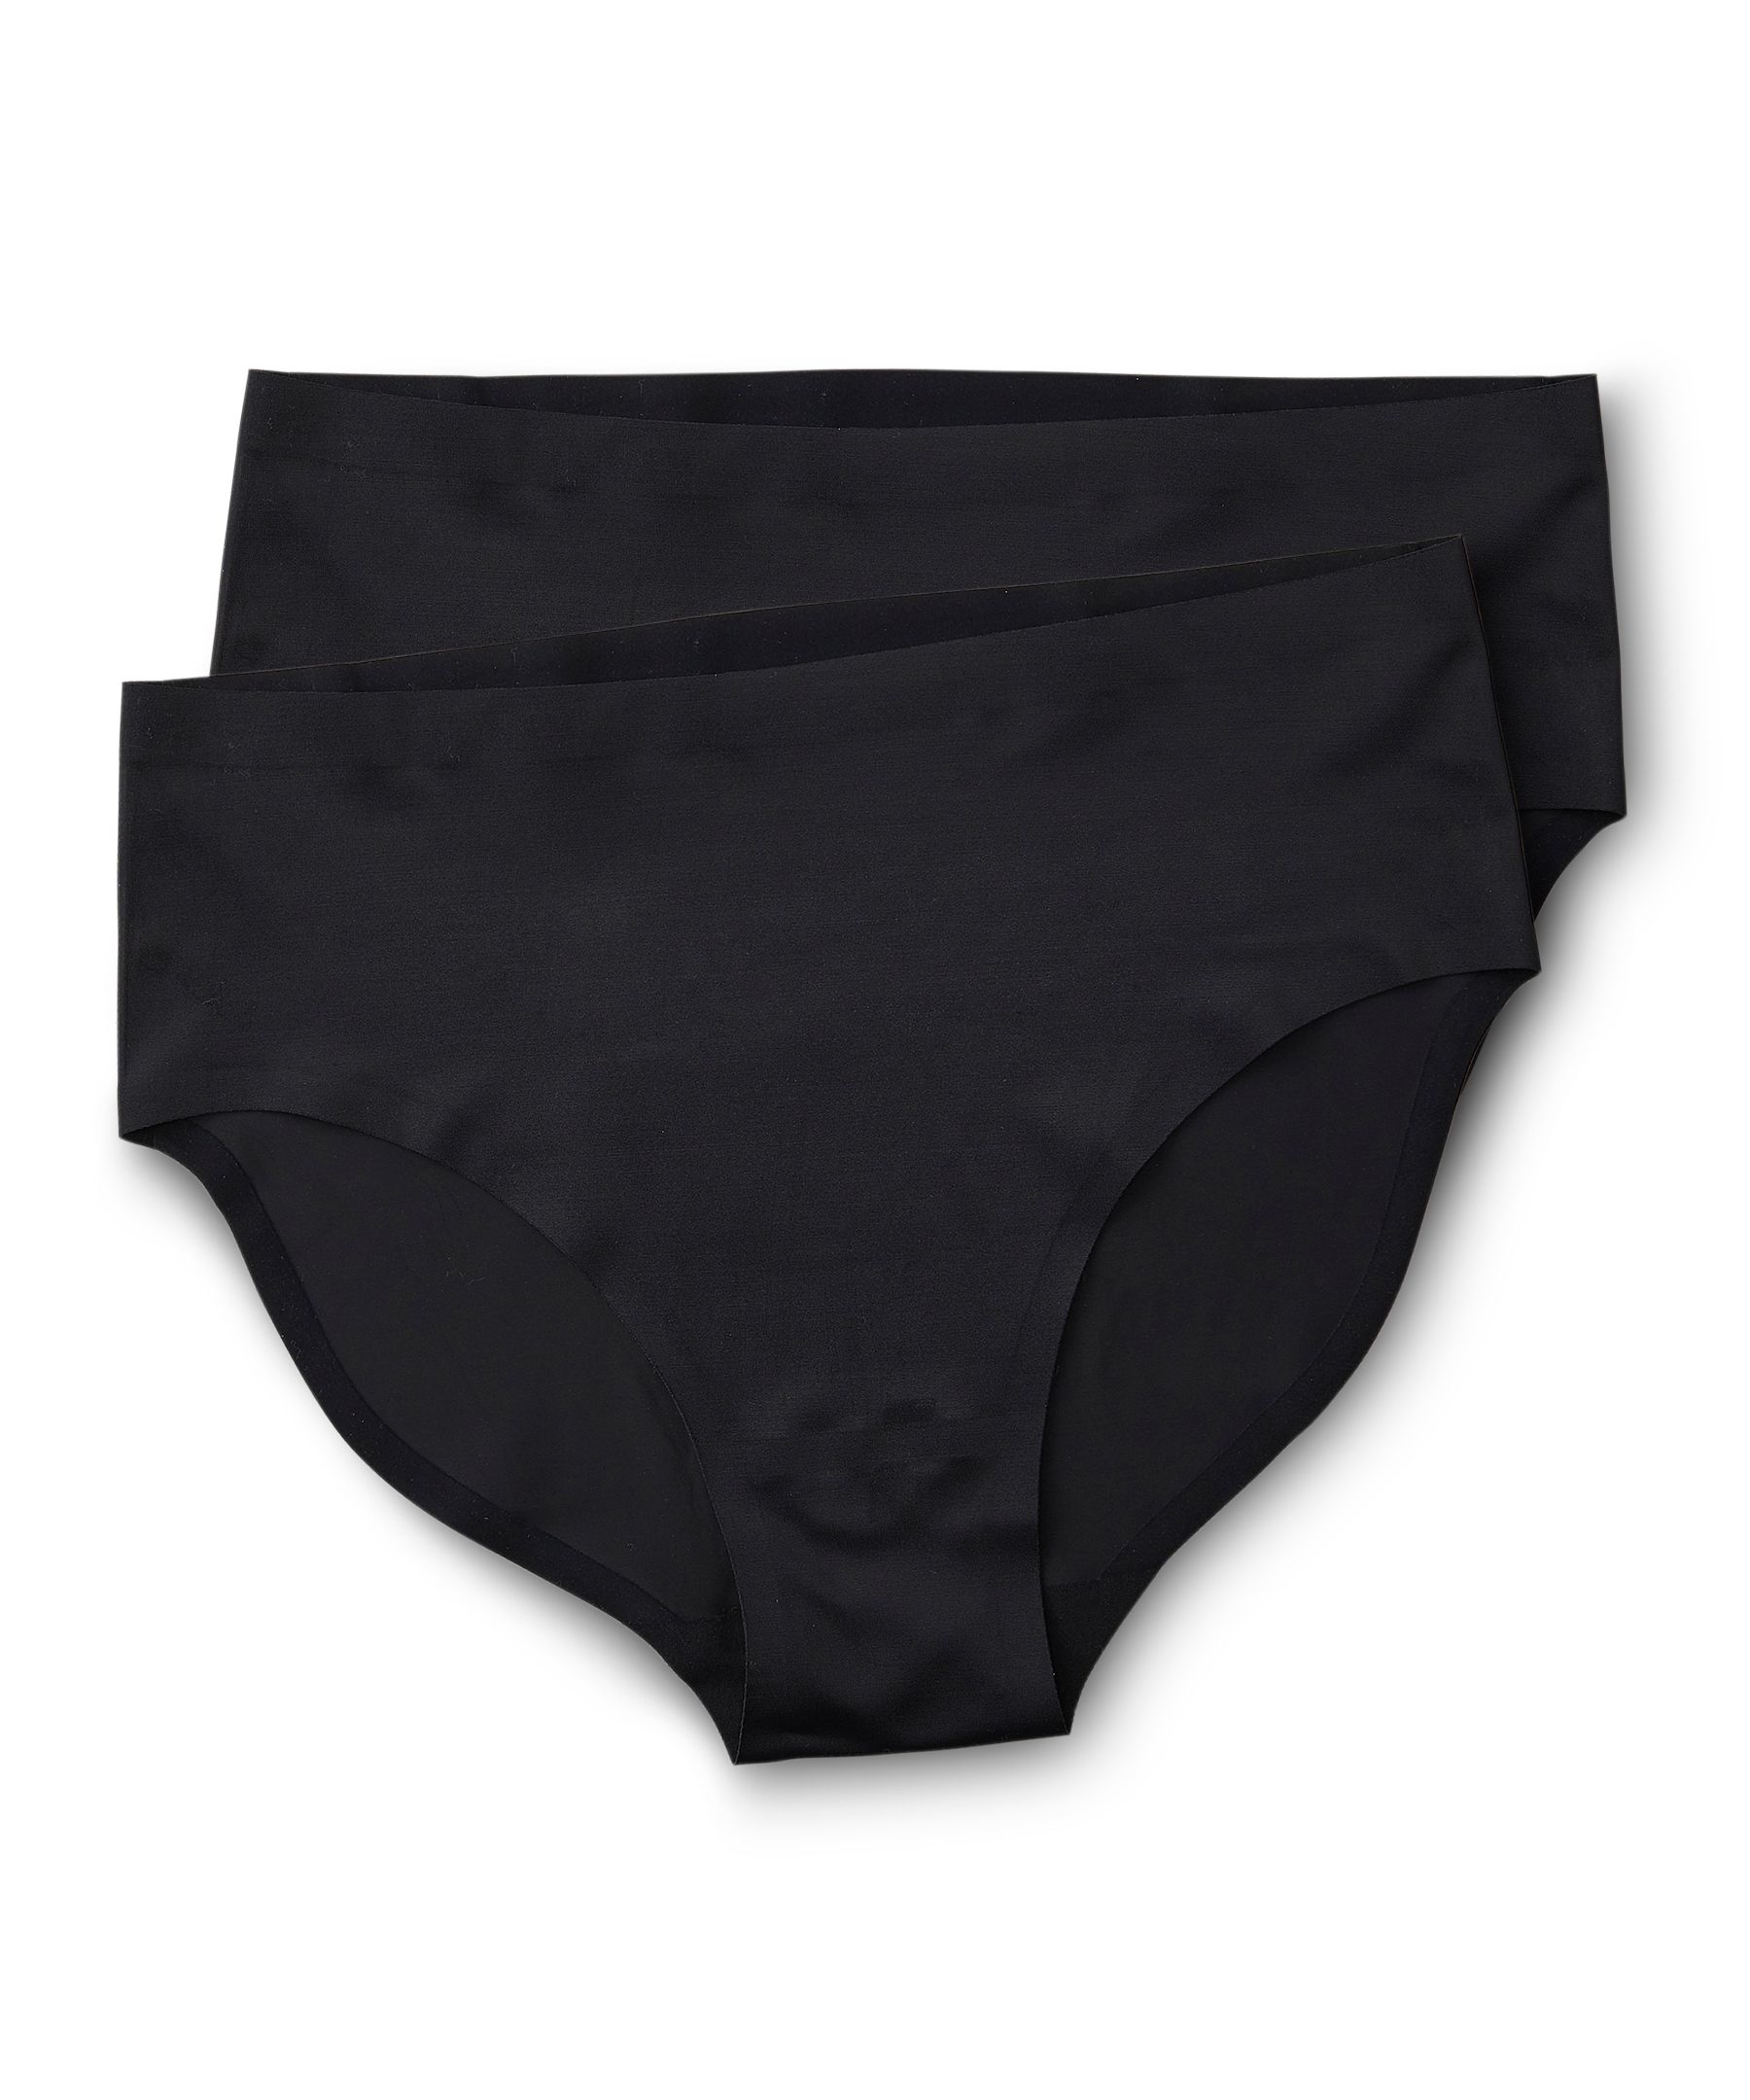 Briefs Nylon Panties 08 Wholesale 3 pcs Panties for Women Plus